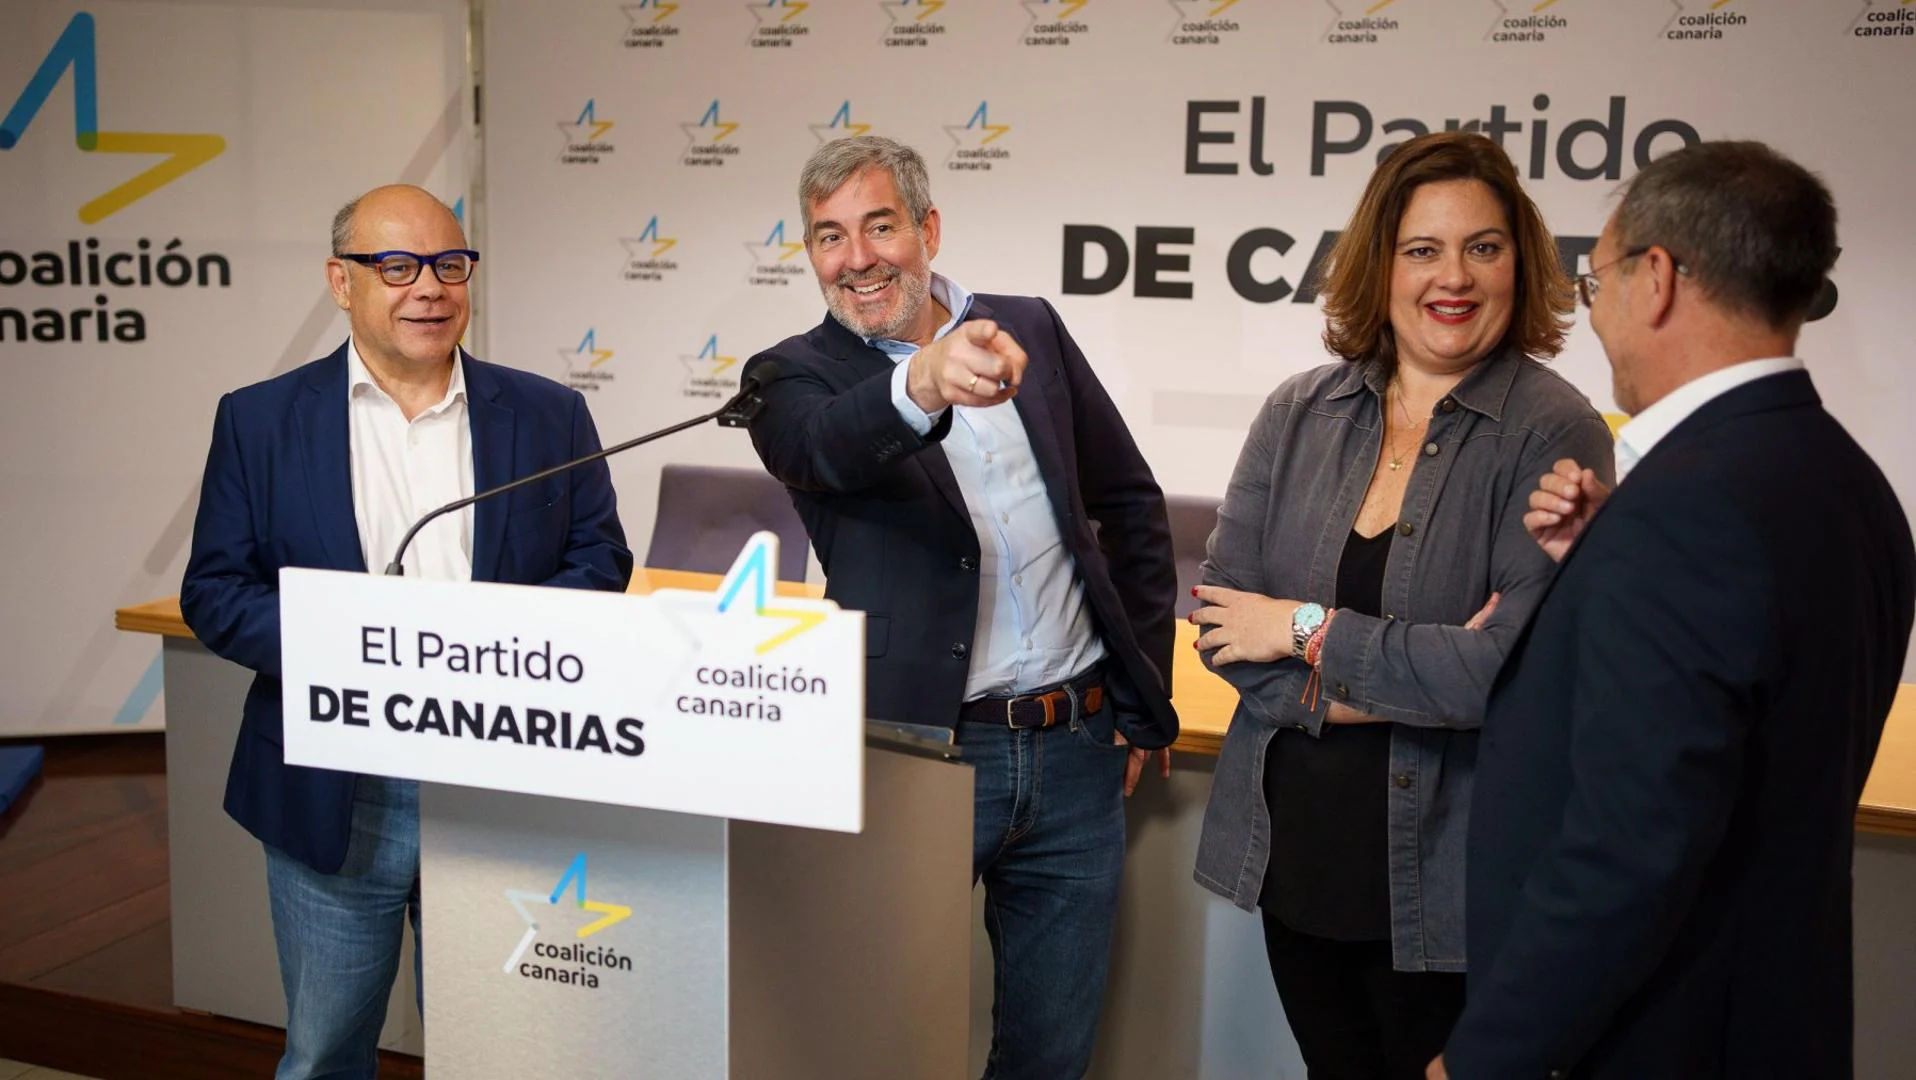 Beatriz Calzada wins integers to be president of the Port of Las Palmas